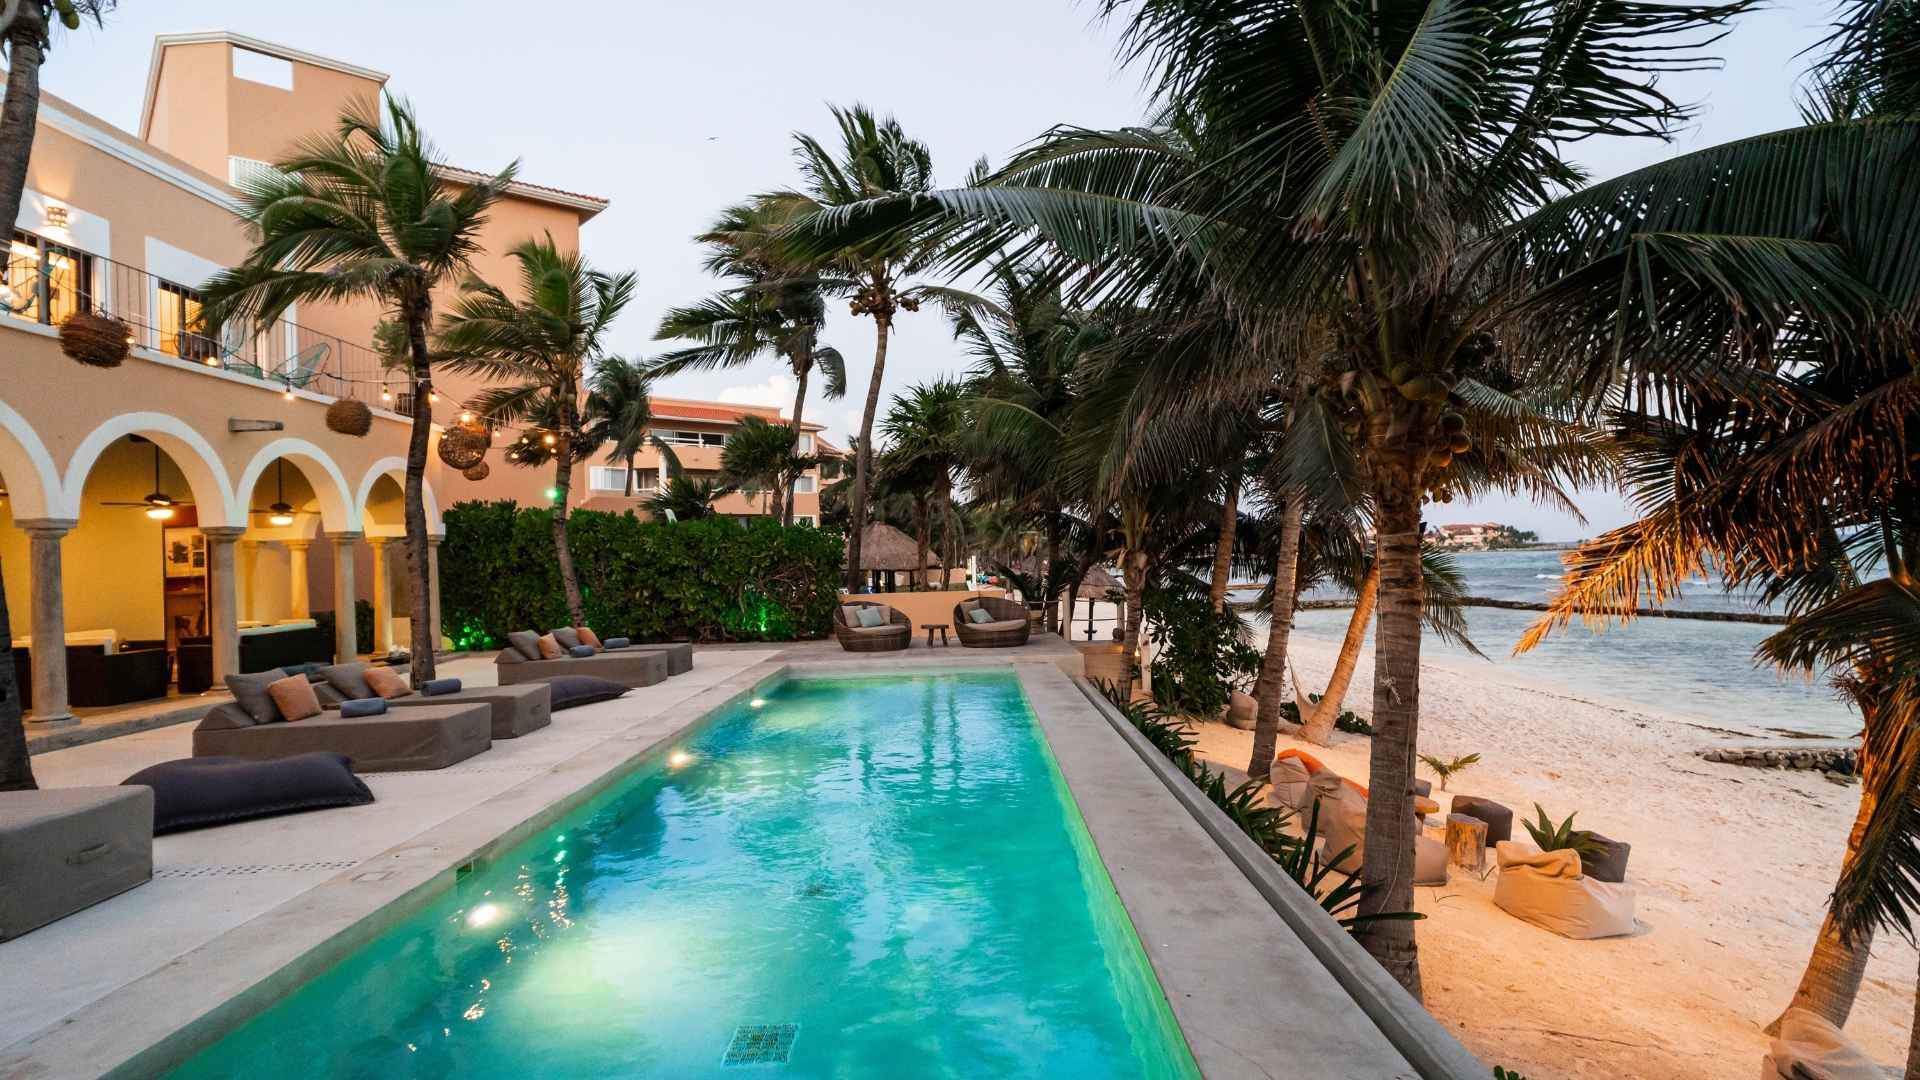 Hacienda del Mar’s outdoor lounge and pool overlooking the beach. 